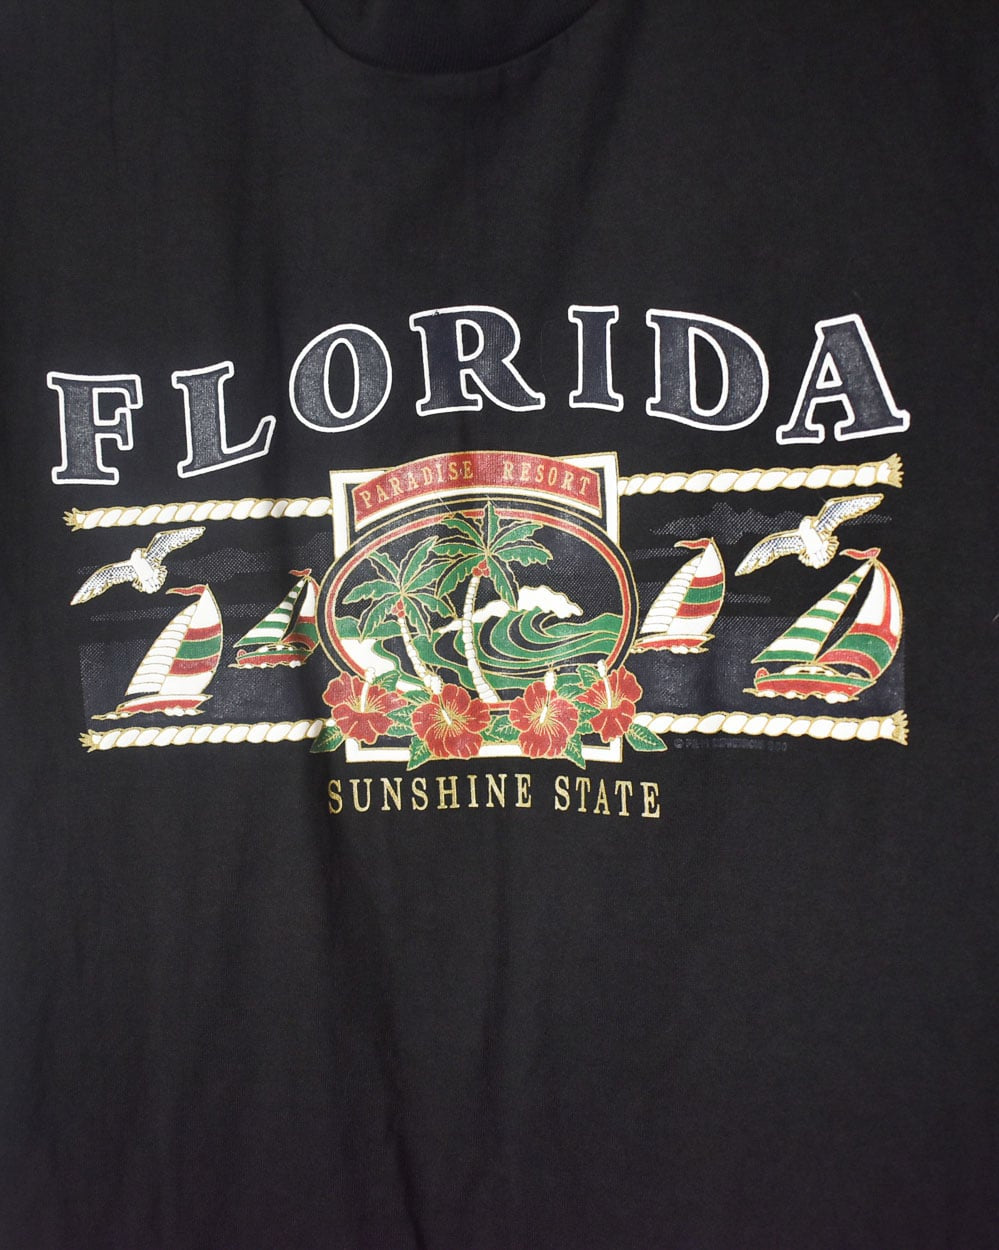 Black Florida Sunshine State Graphic T-Shirt - Small Women's